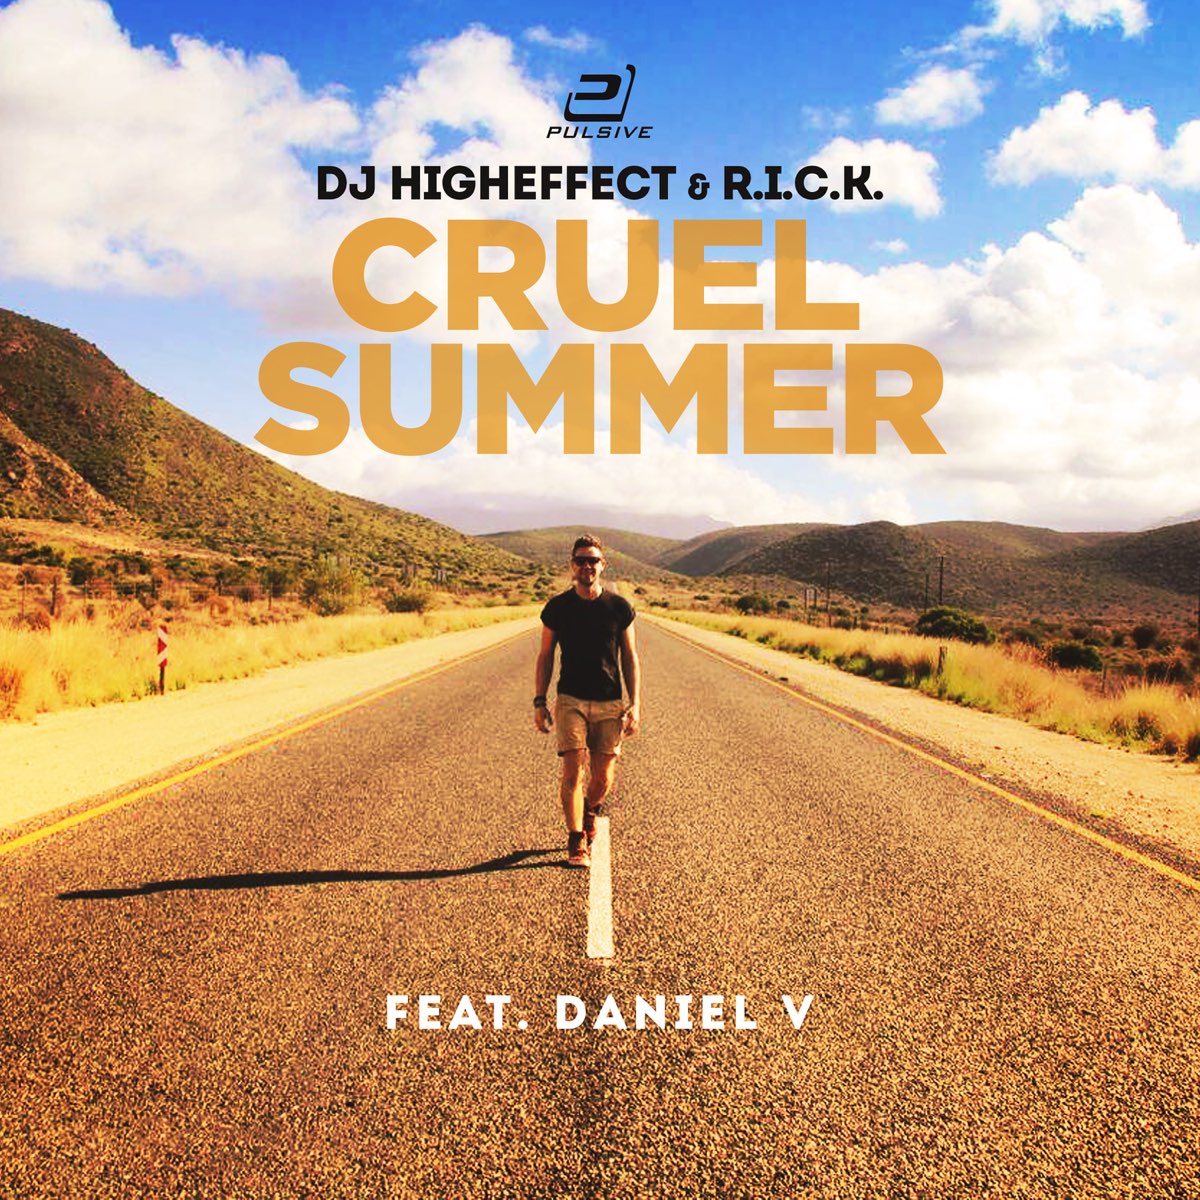 Cruel summer песня. Steve Summers. Daniel feat.